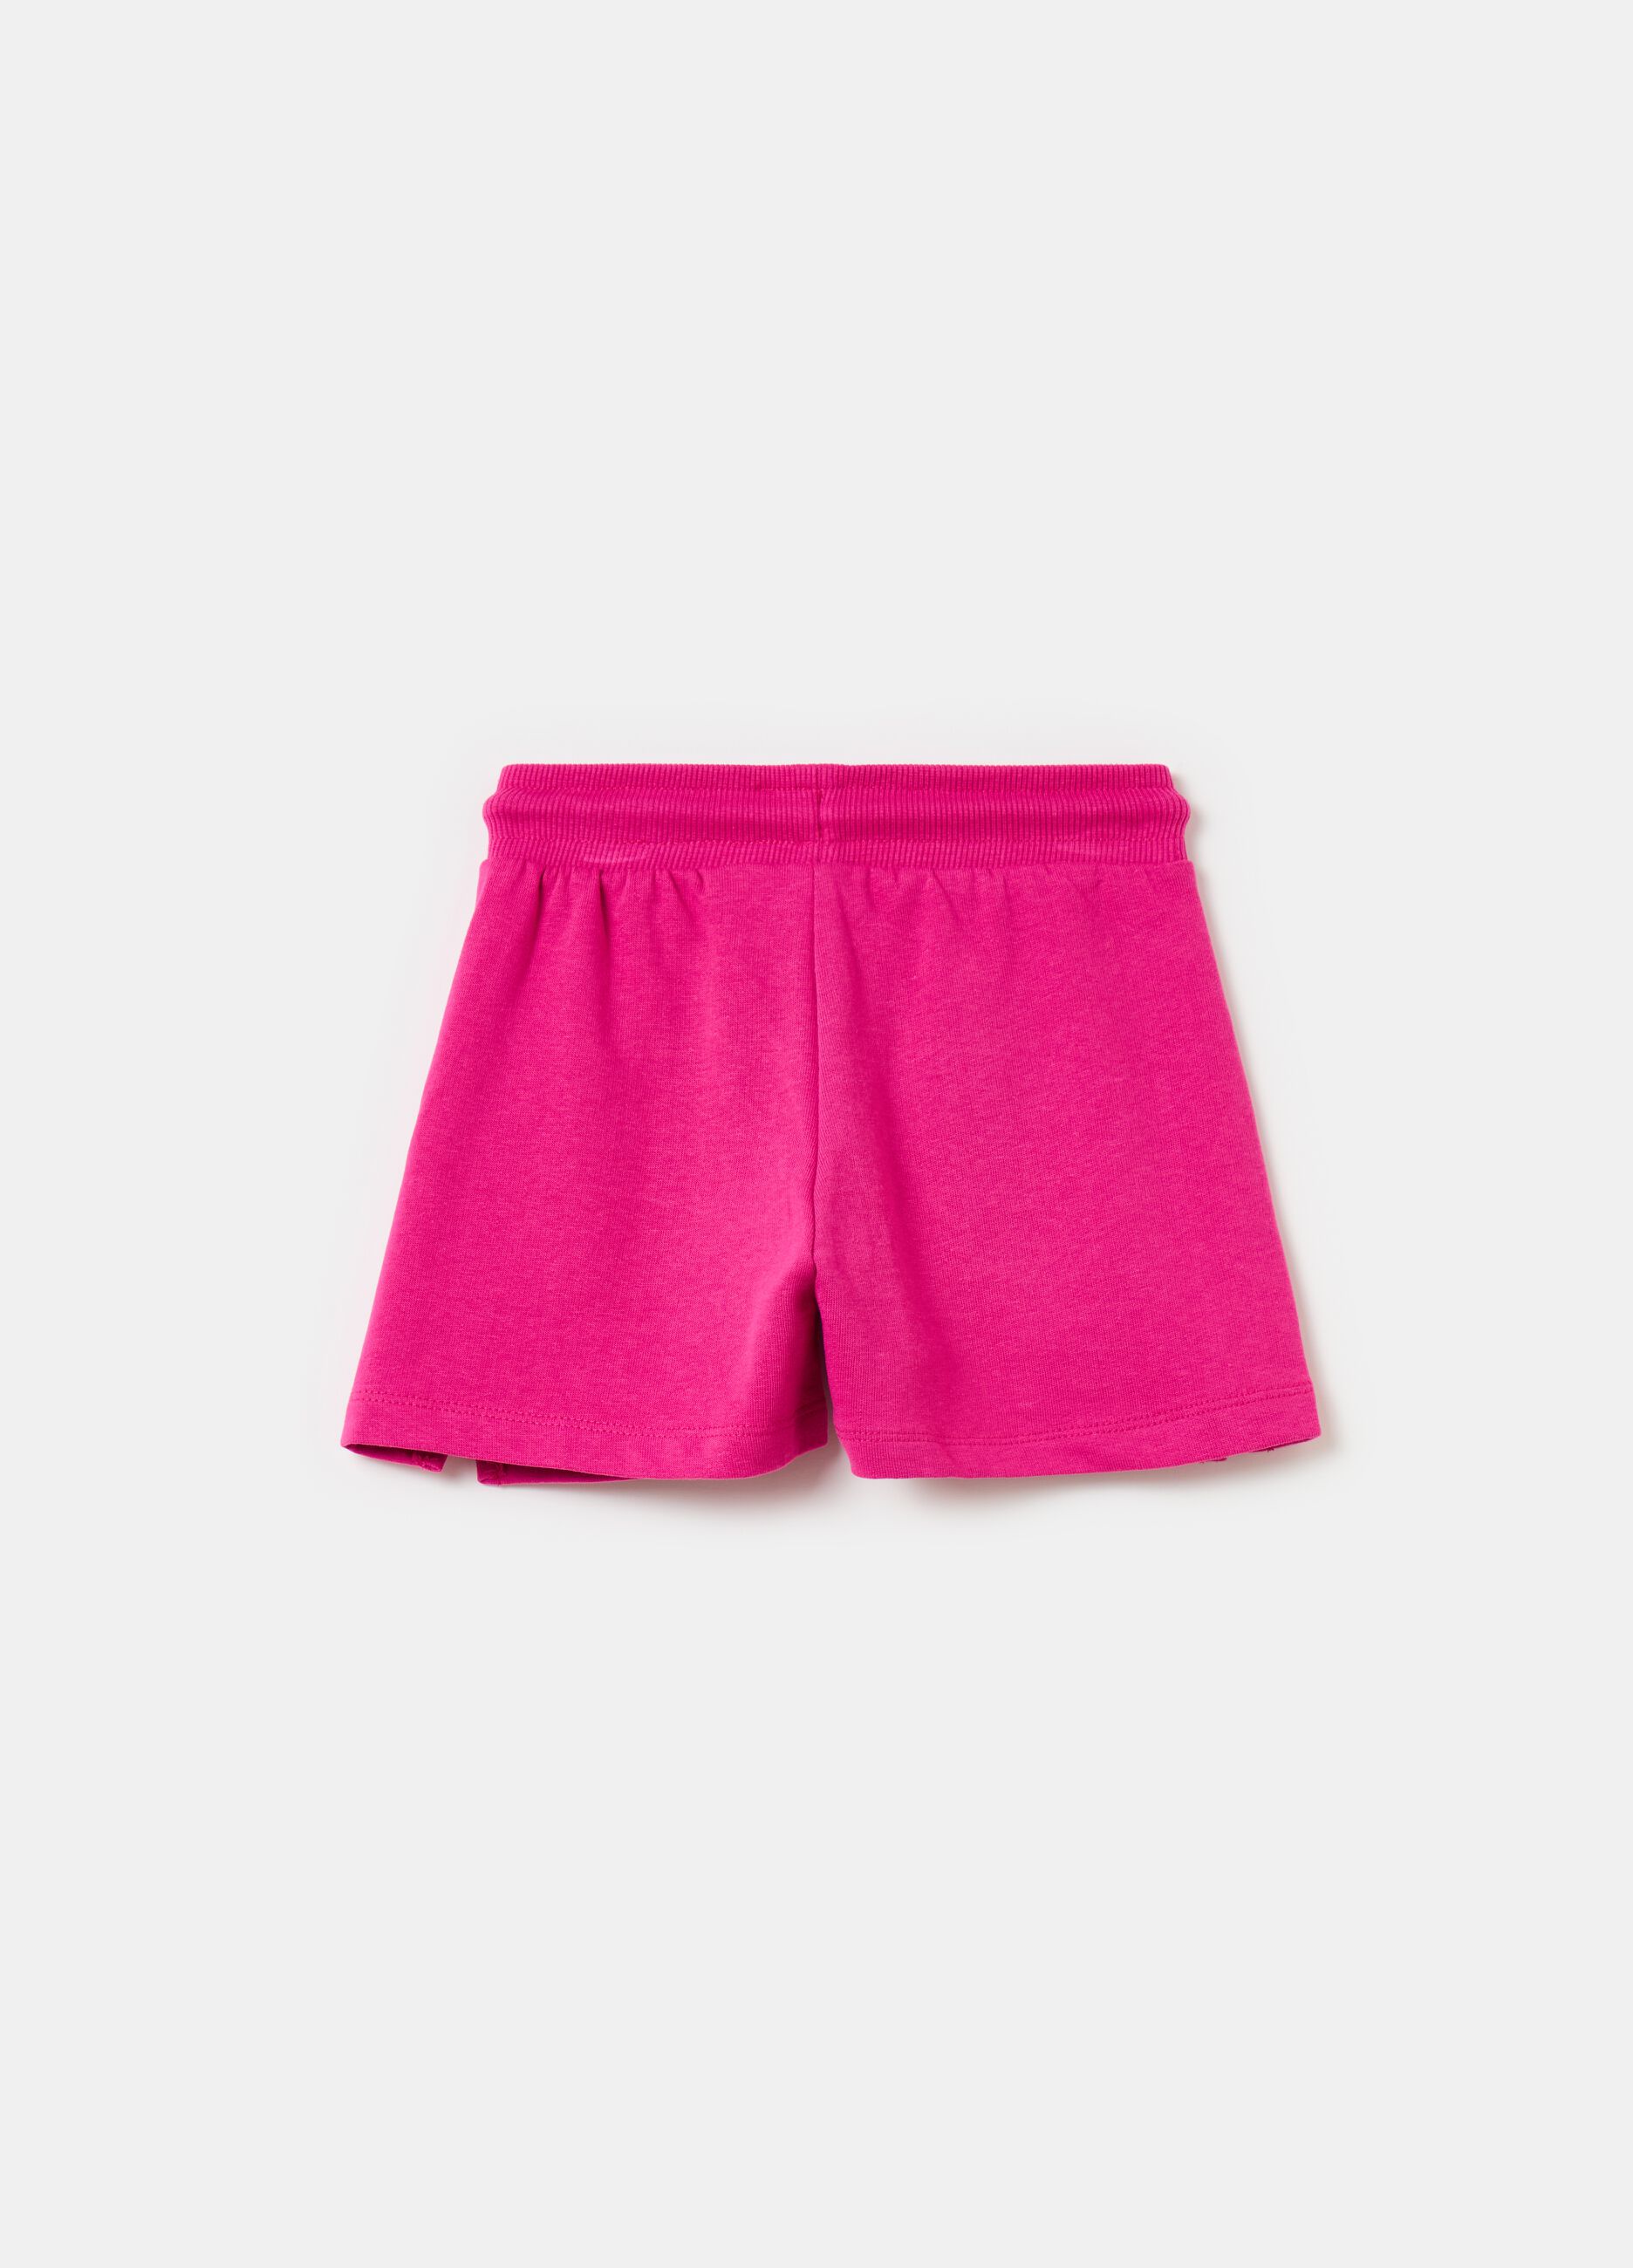 Fleece shorts with Hello Kitty print